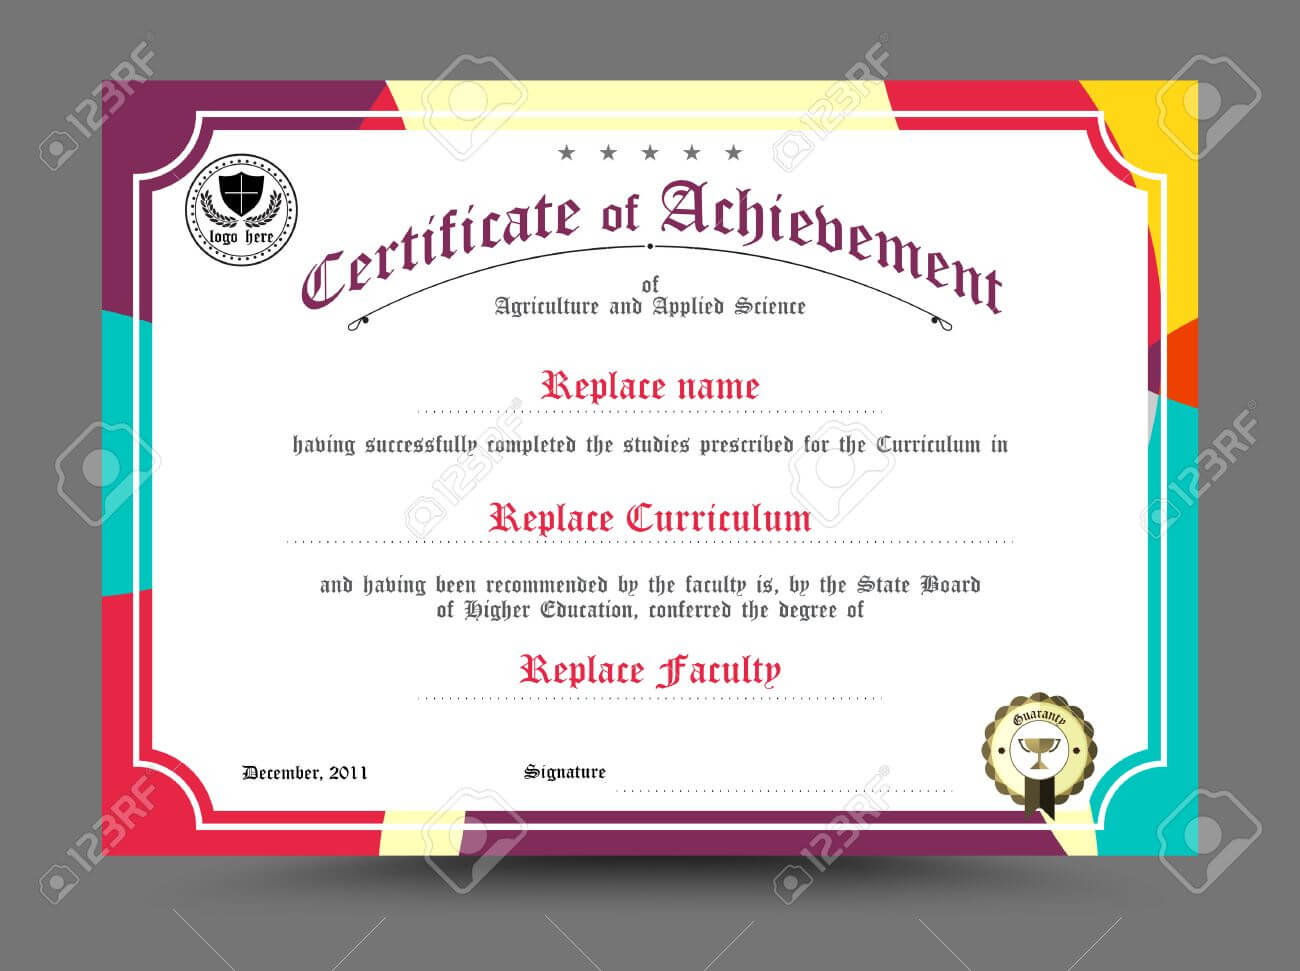 Diploma Certificate Template Design. Vector Illustration. In Design A Certificate Template